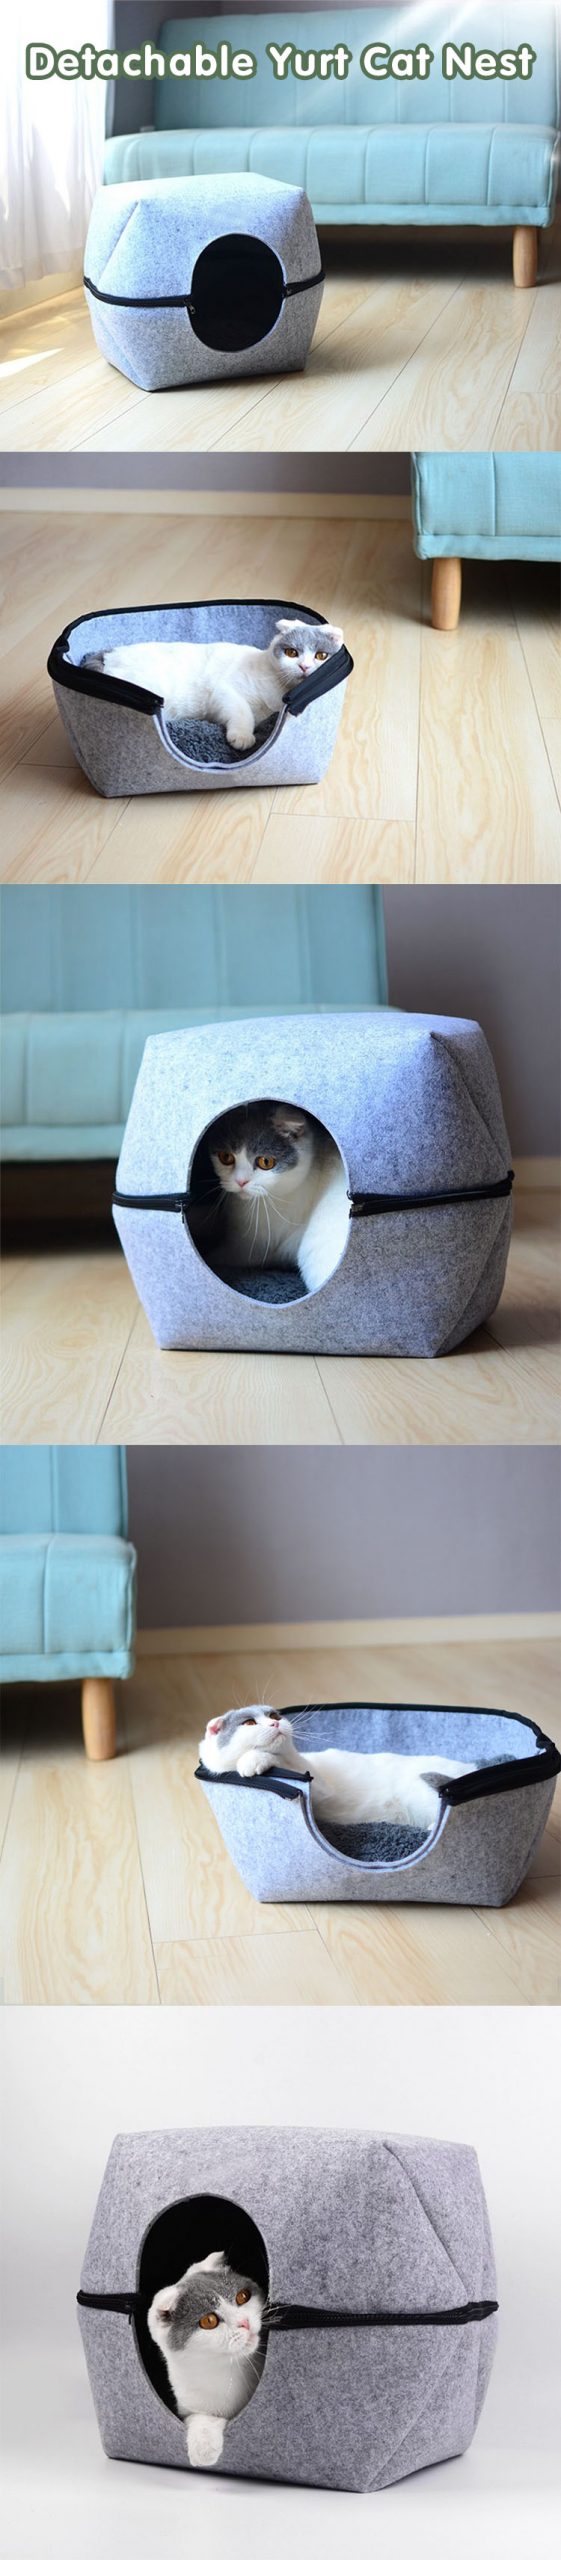 Detachable Yurt Cat Nest